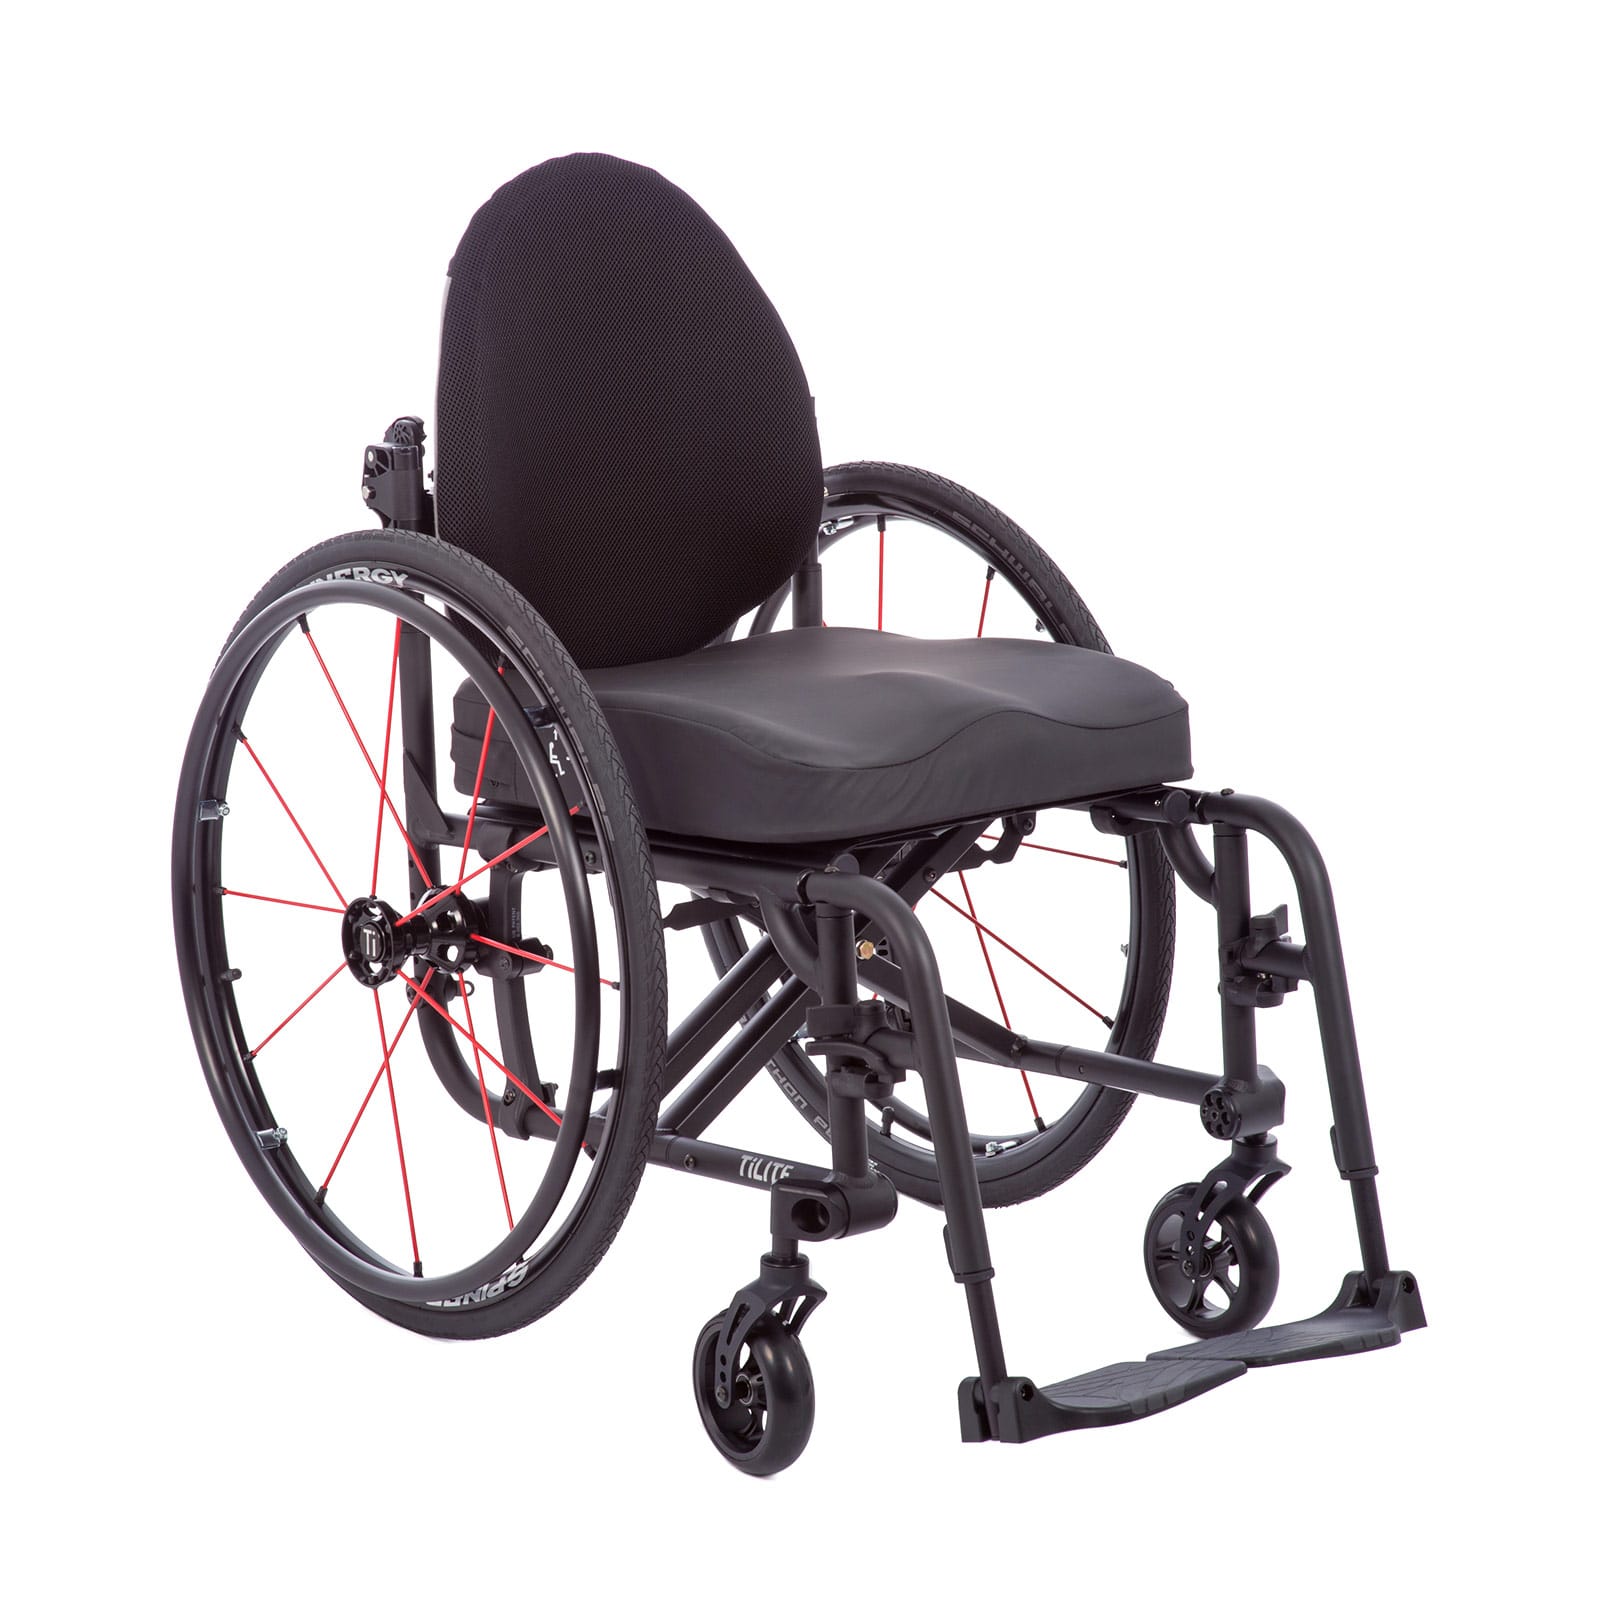 TiLite Aero X Folding Wheelchair in black frame color